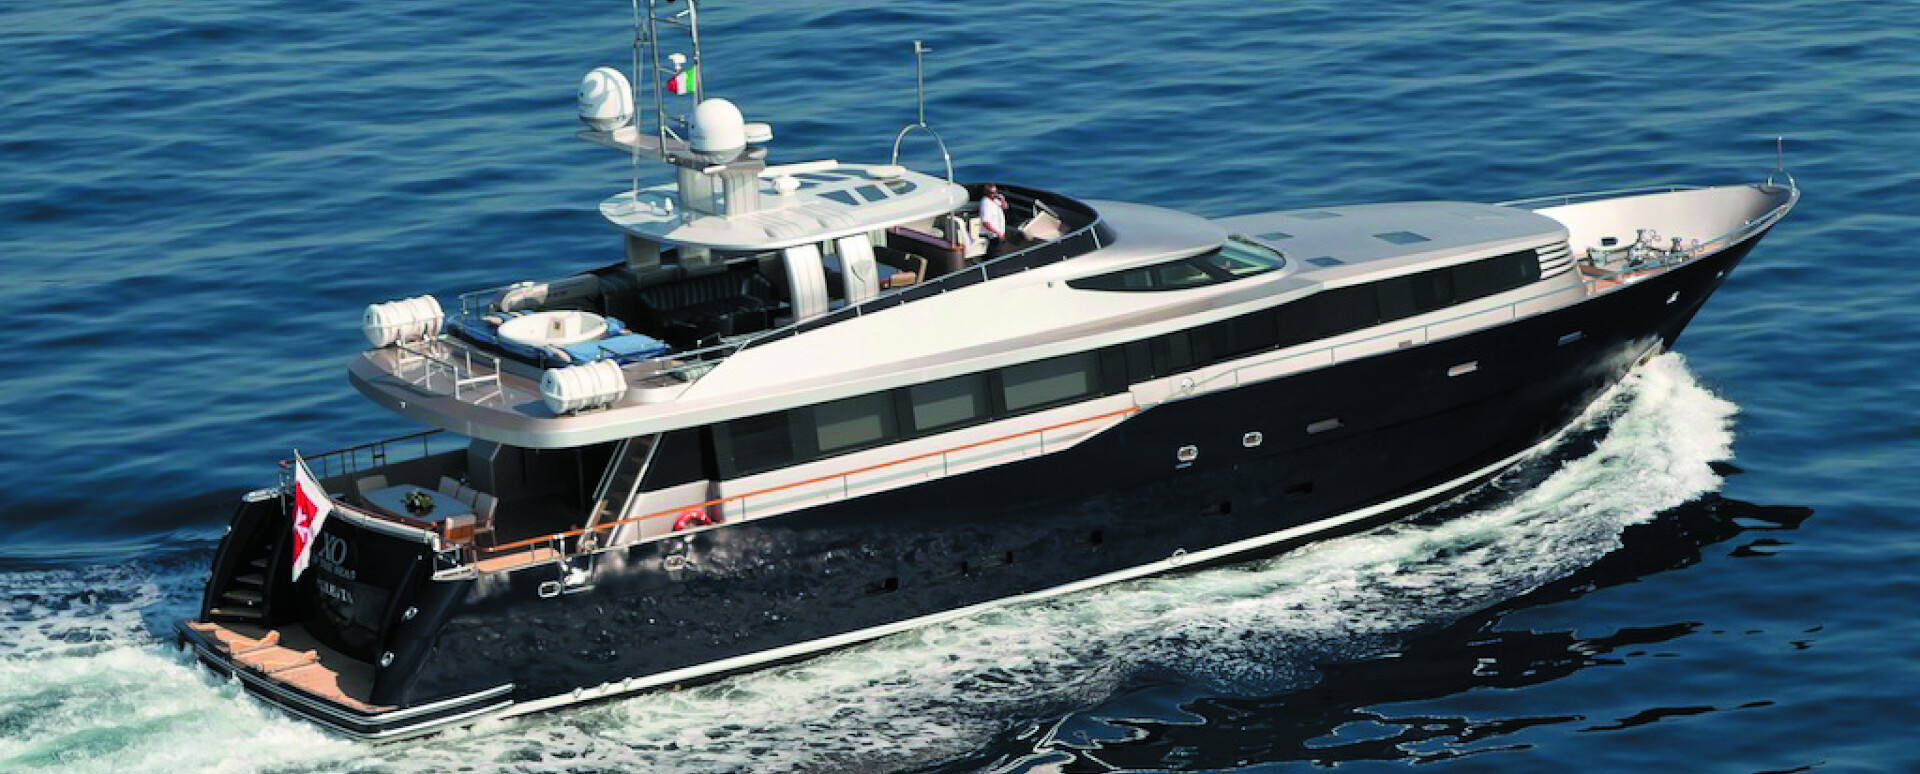                                                                                                     M/Y XO of the Seas  EUR 1,050,000 Price Drop!
                                                                                            